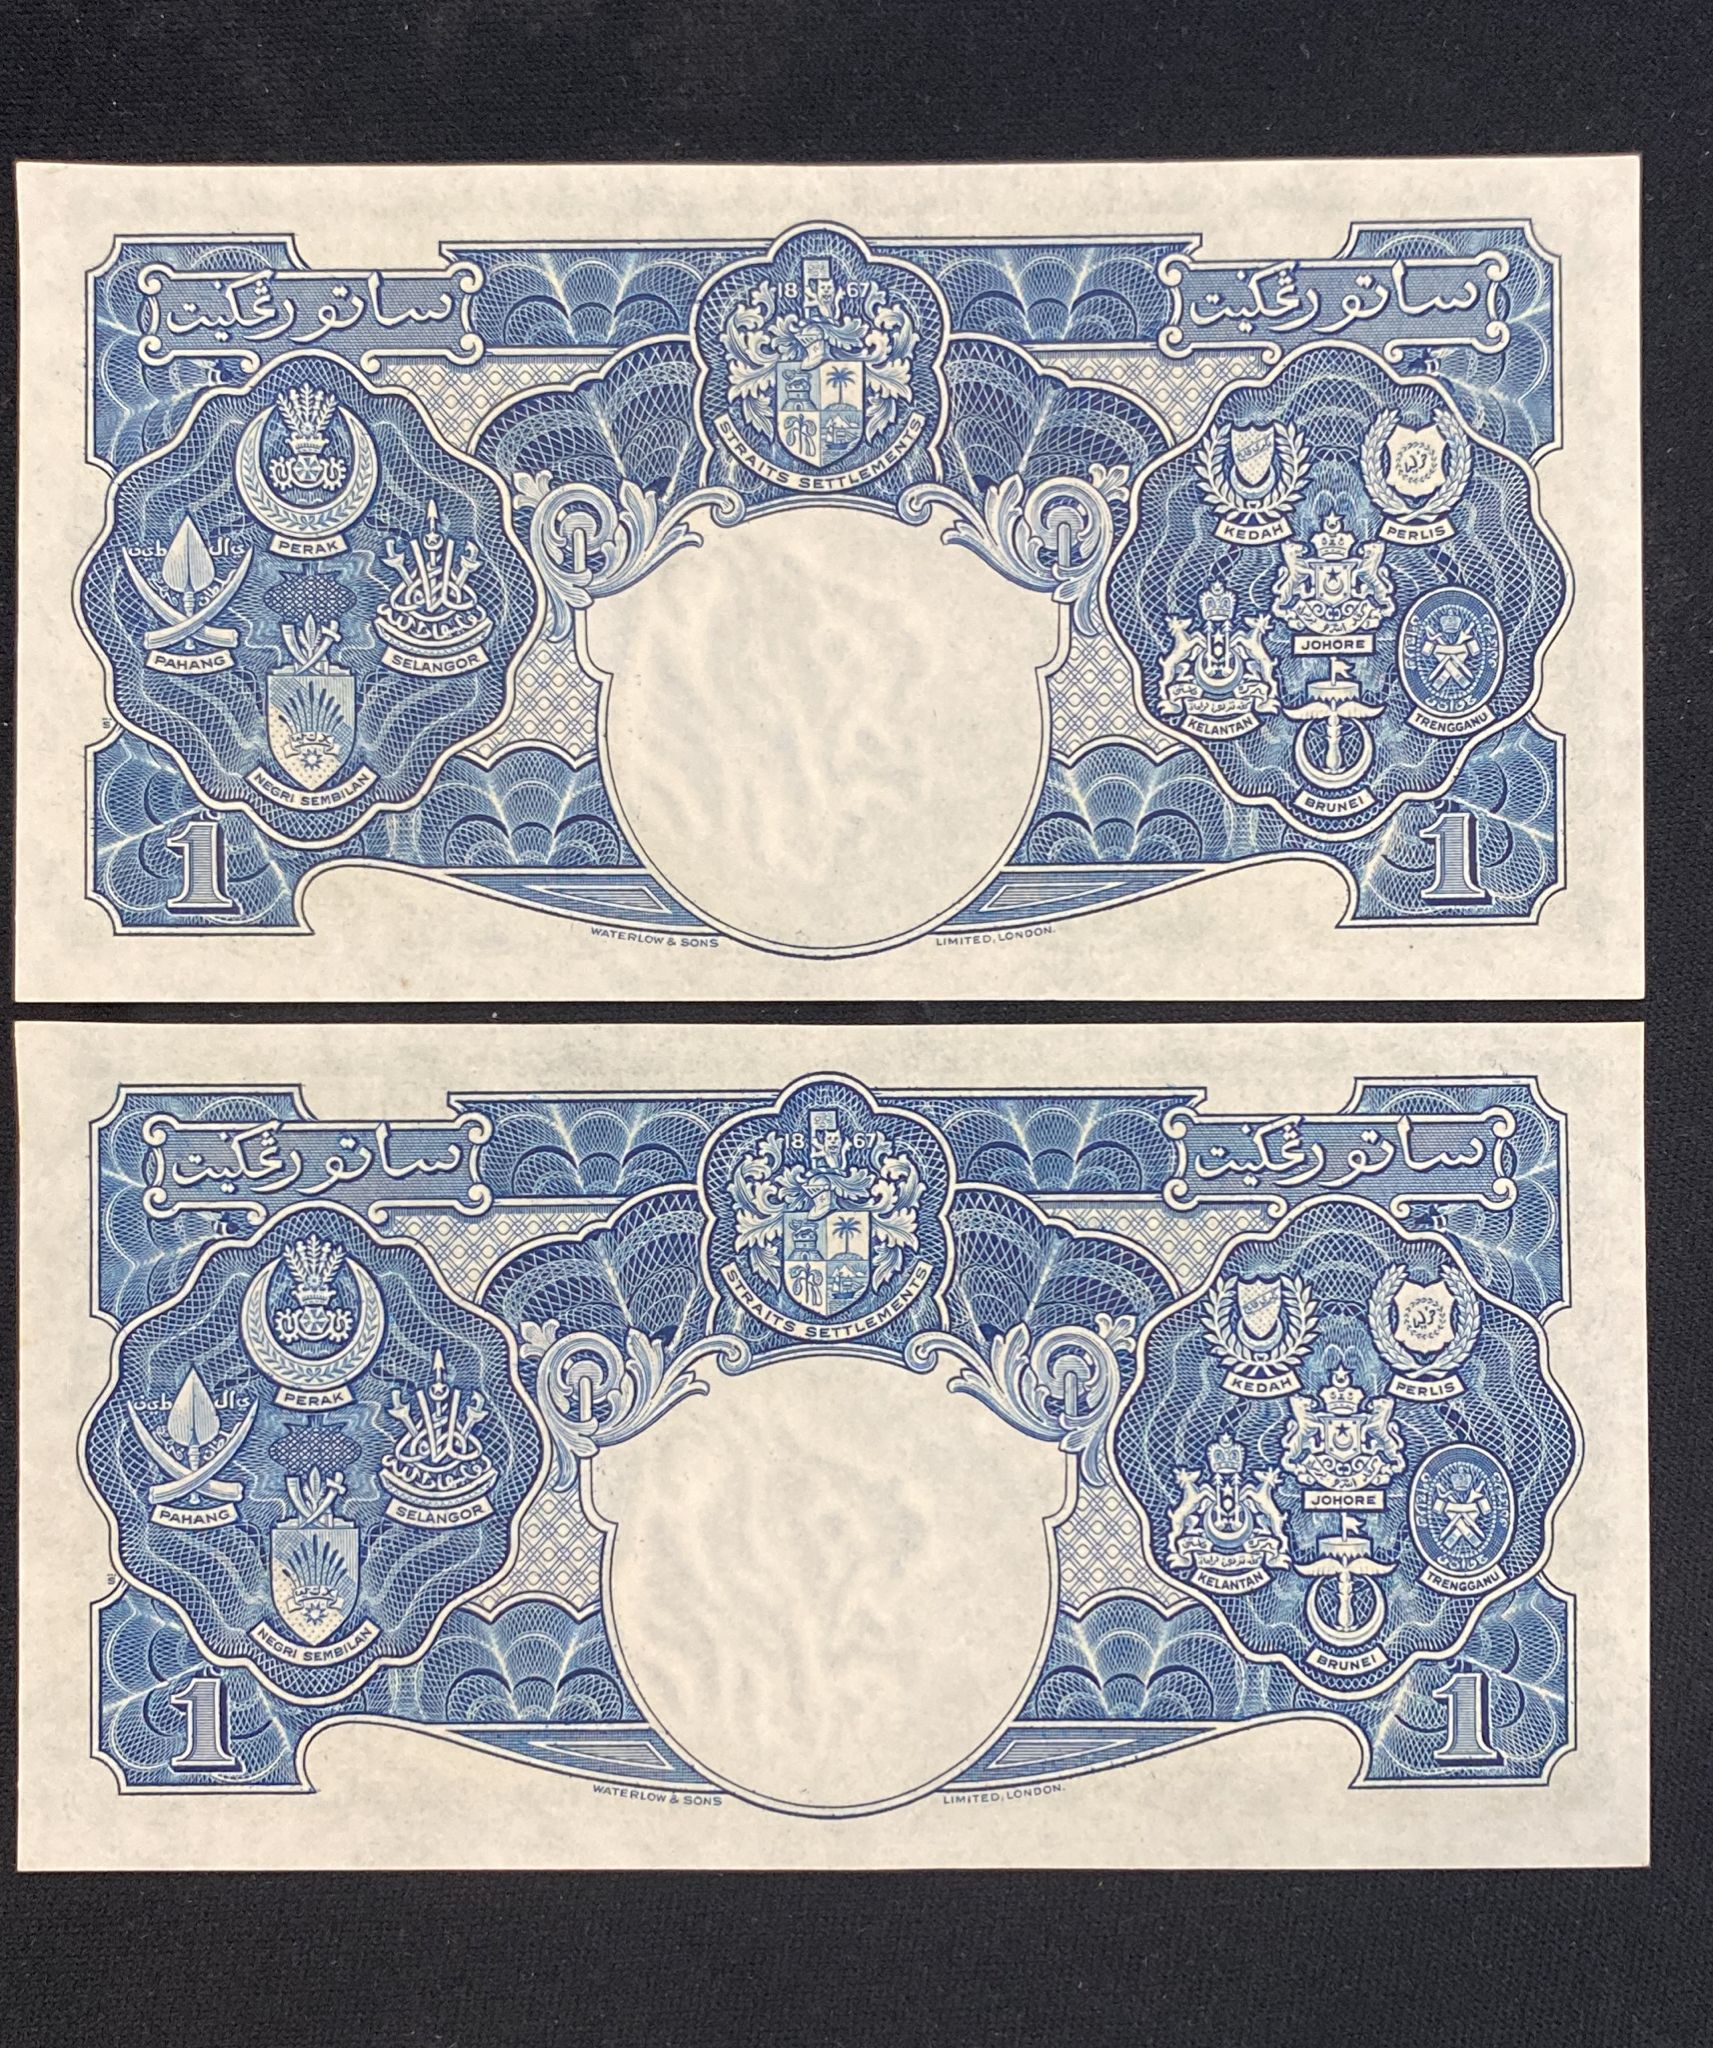 MALAYA GEORGE VI 1 DOLLAR; 5 CENTS 1941 (4) - Image 6 of 6